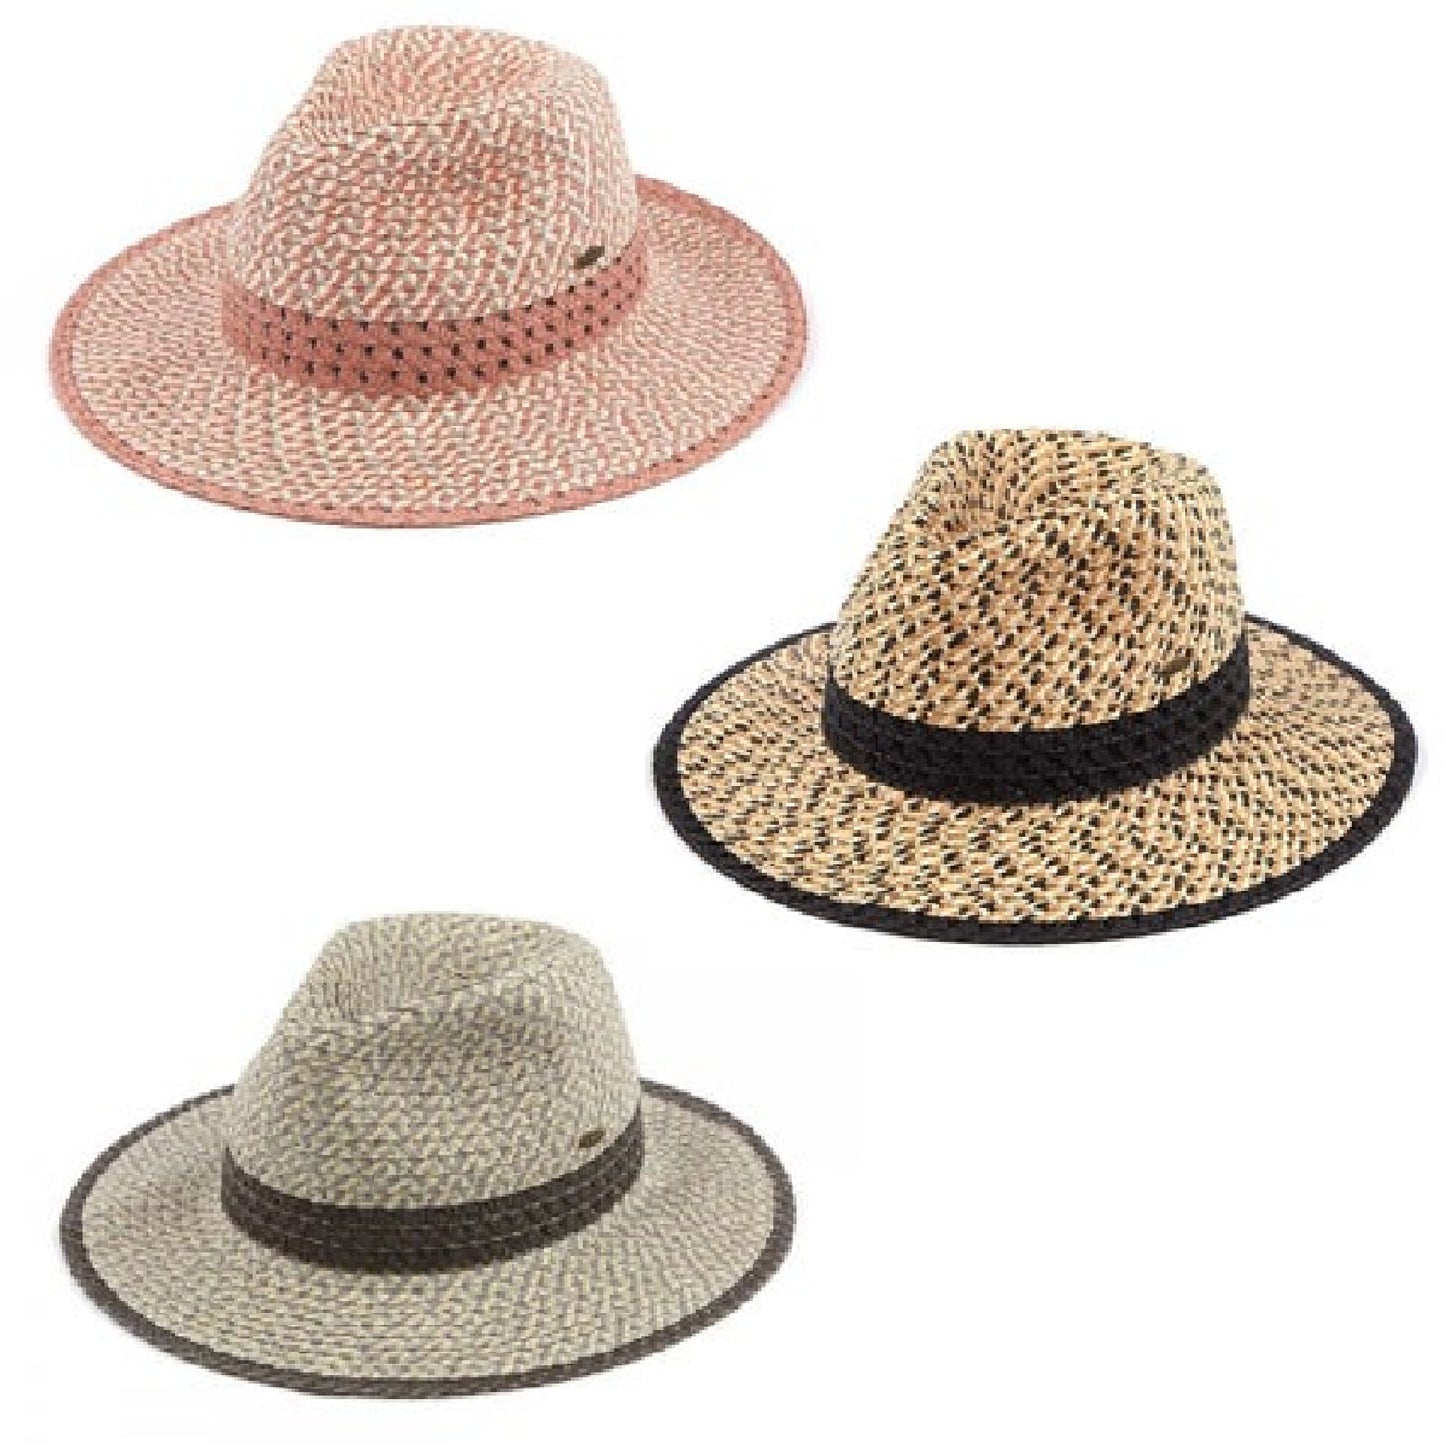 Triple Heather Panama Hat